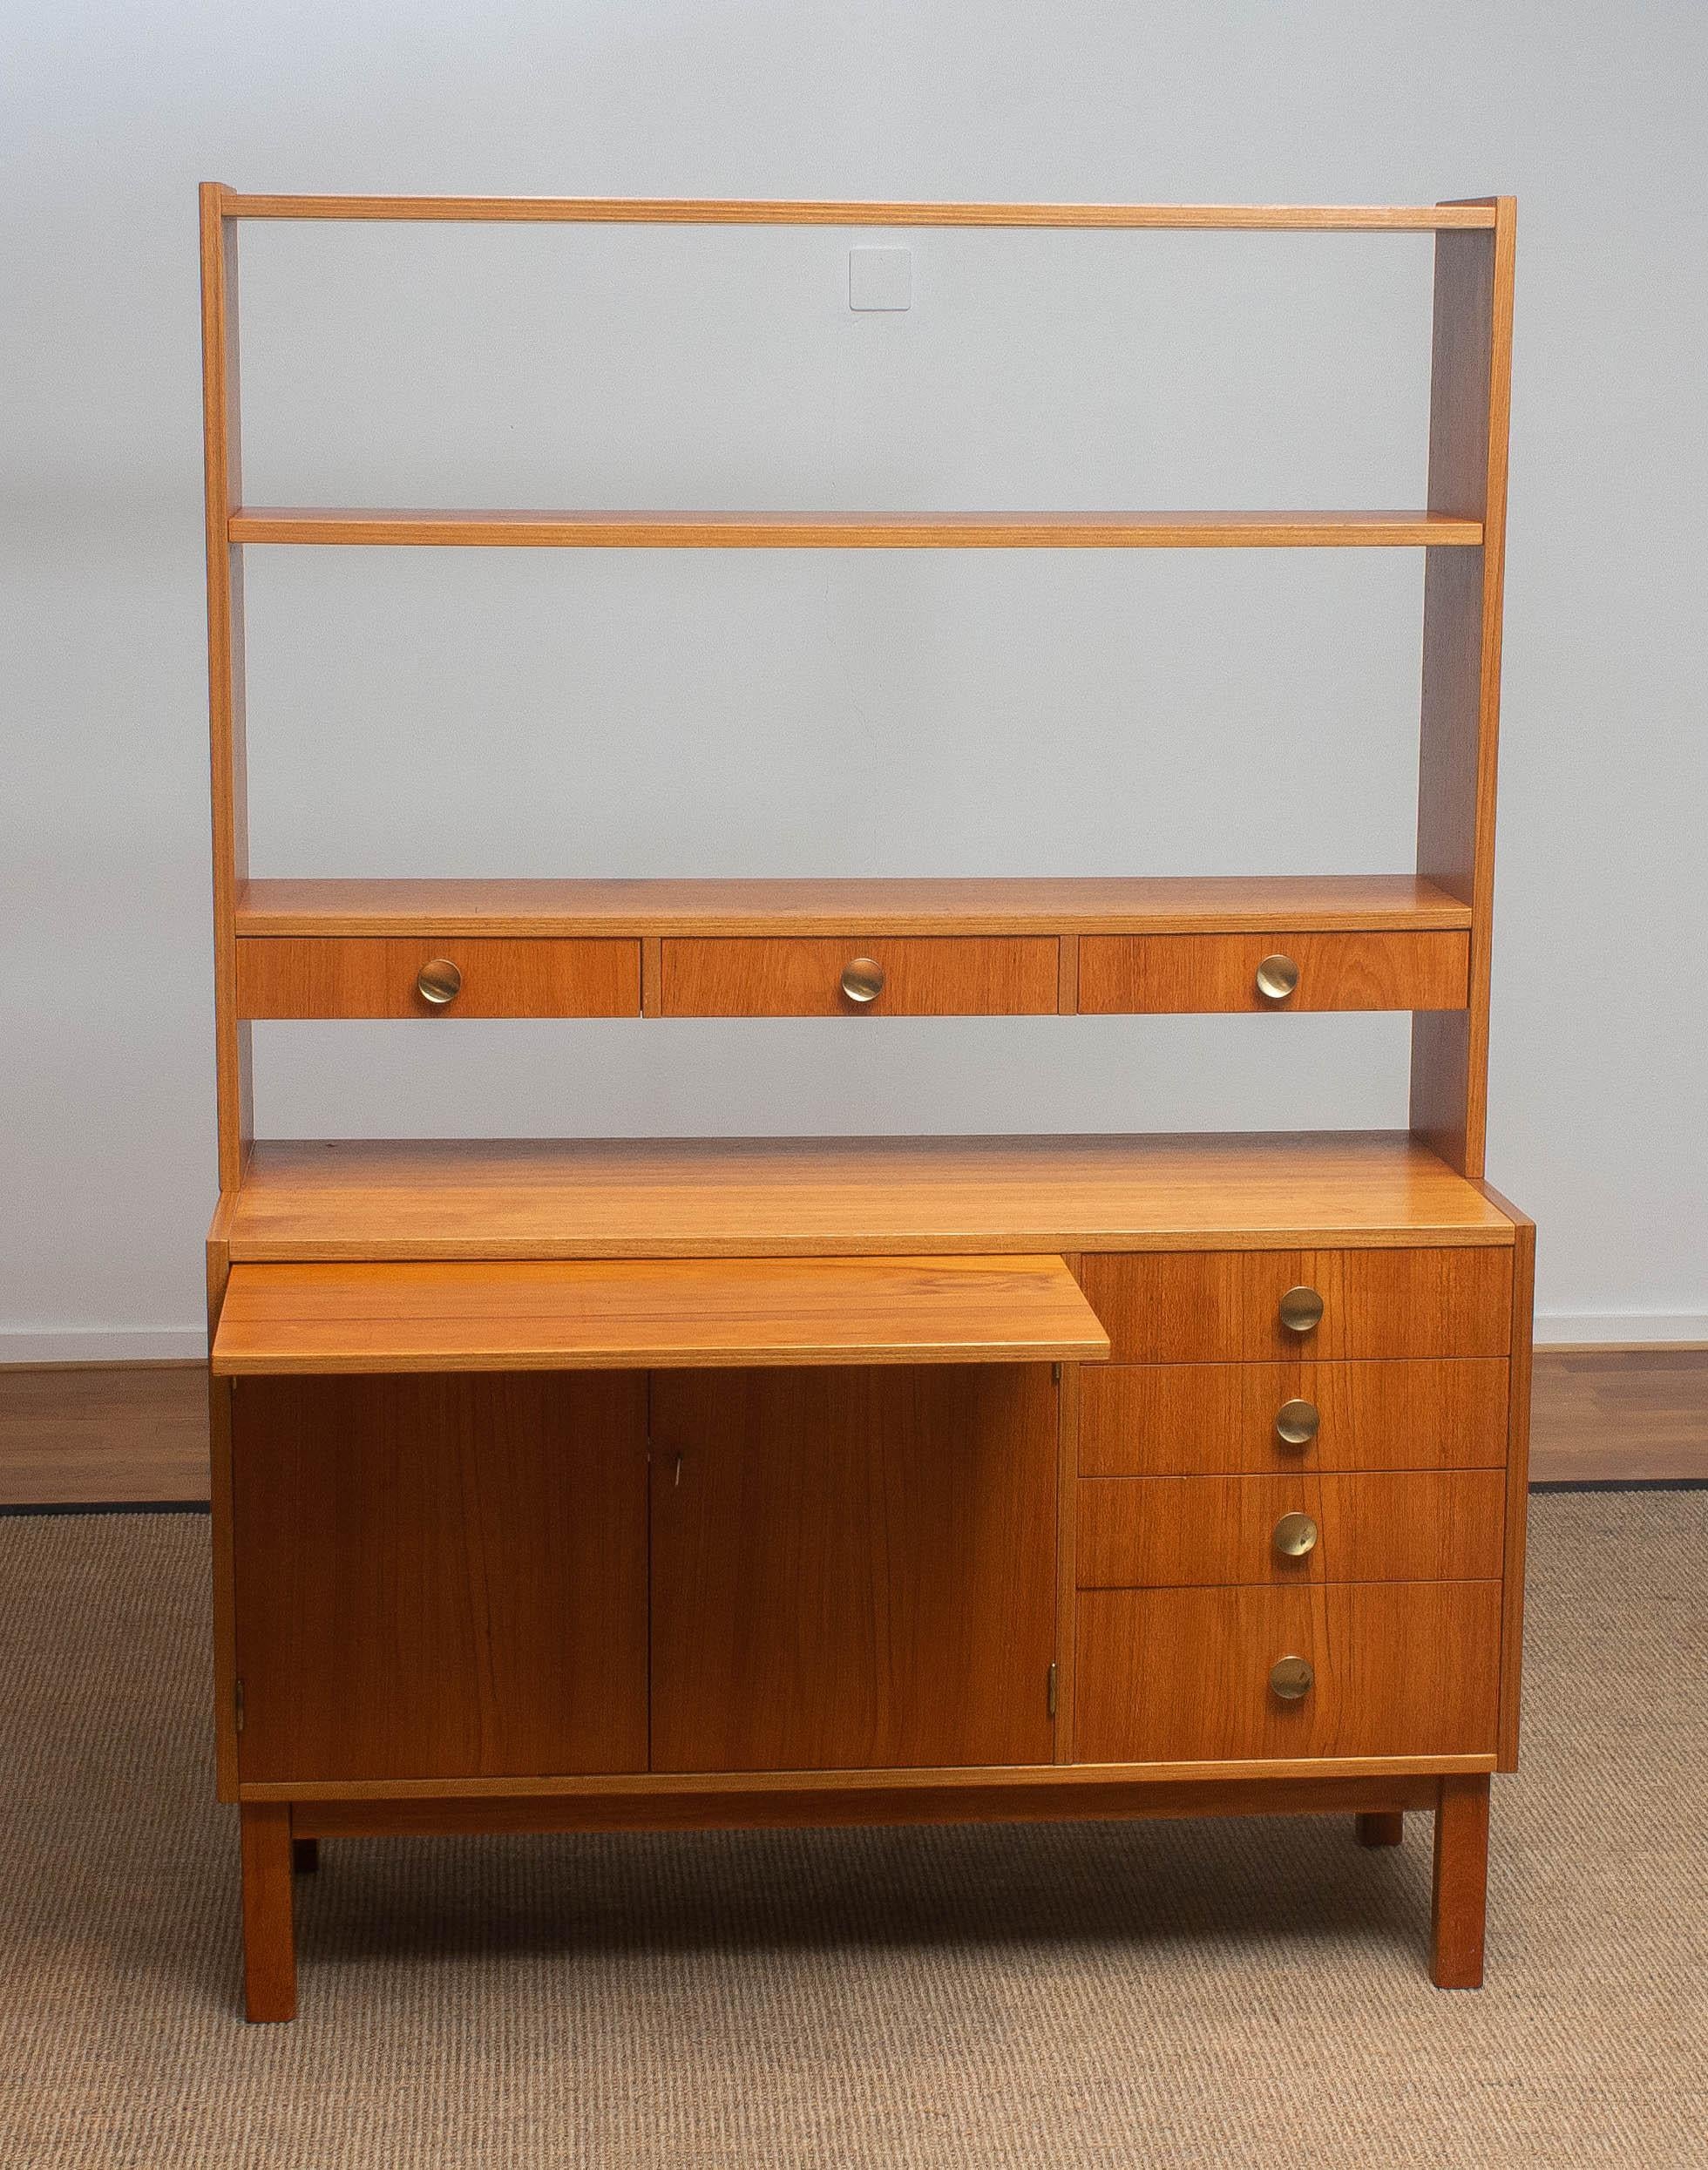 Scandinavian Modern 1950s Teak Veneer and Brass Bookshelves Cabinet with Writing Space from Sweden